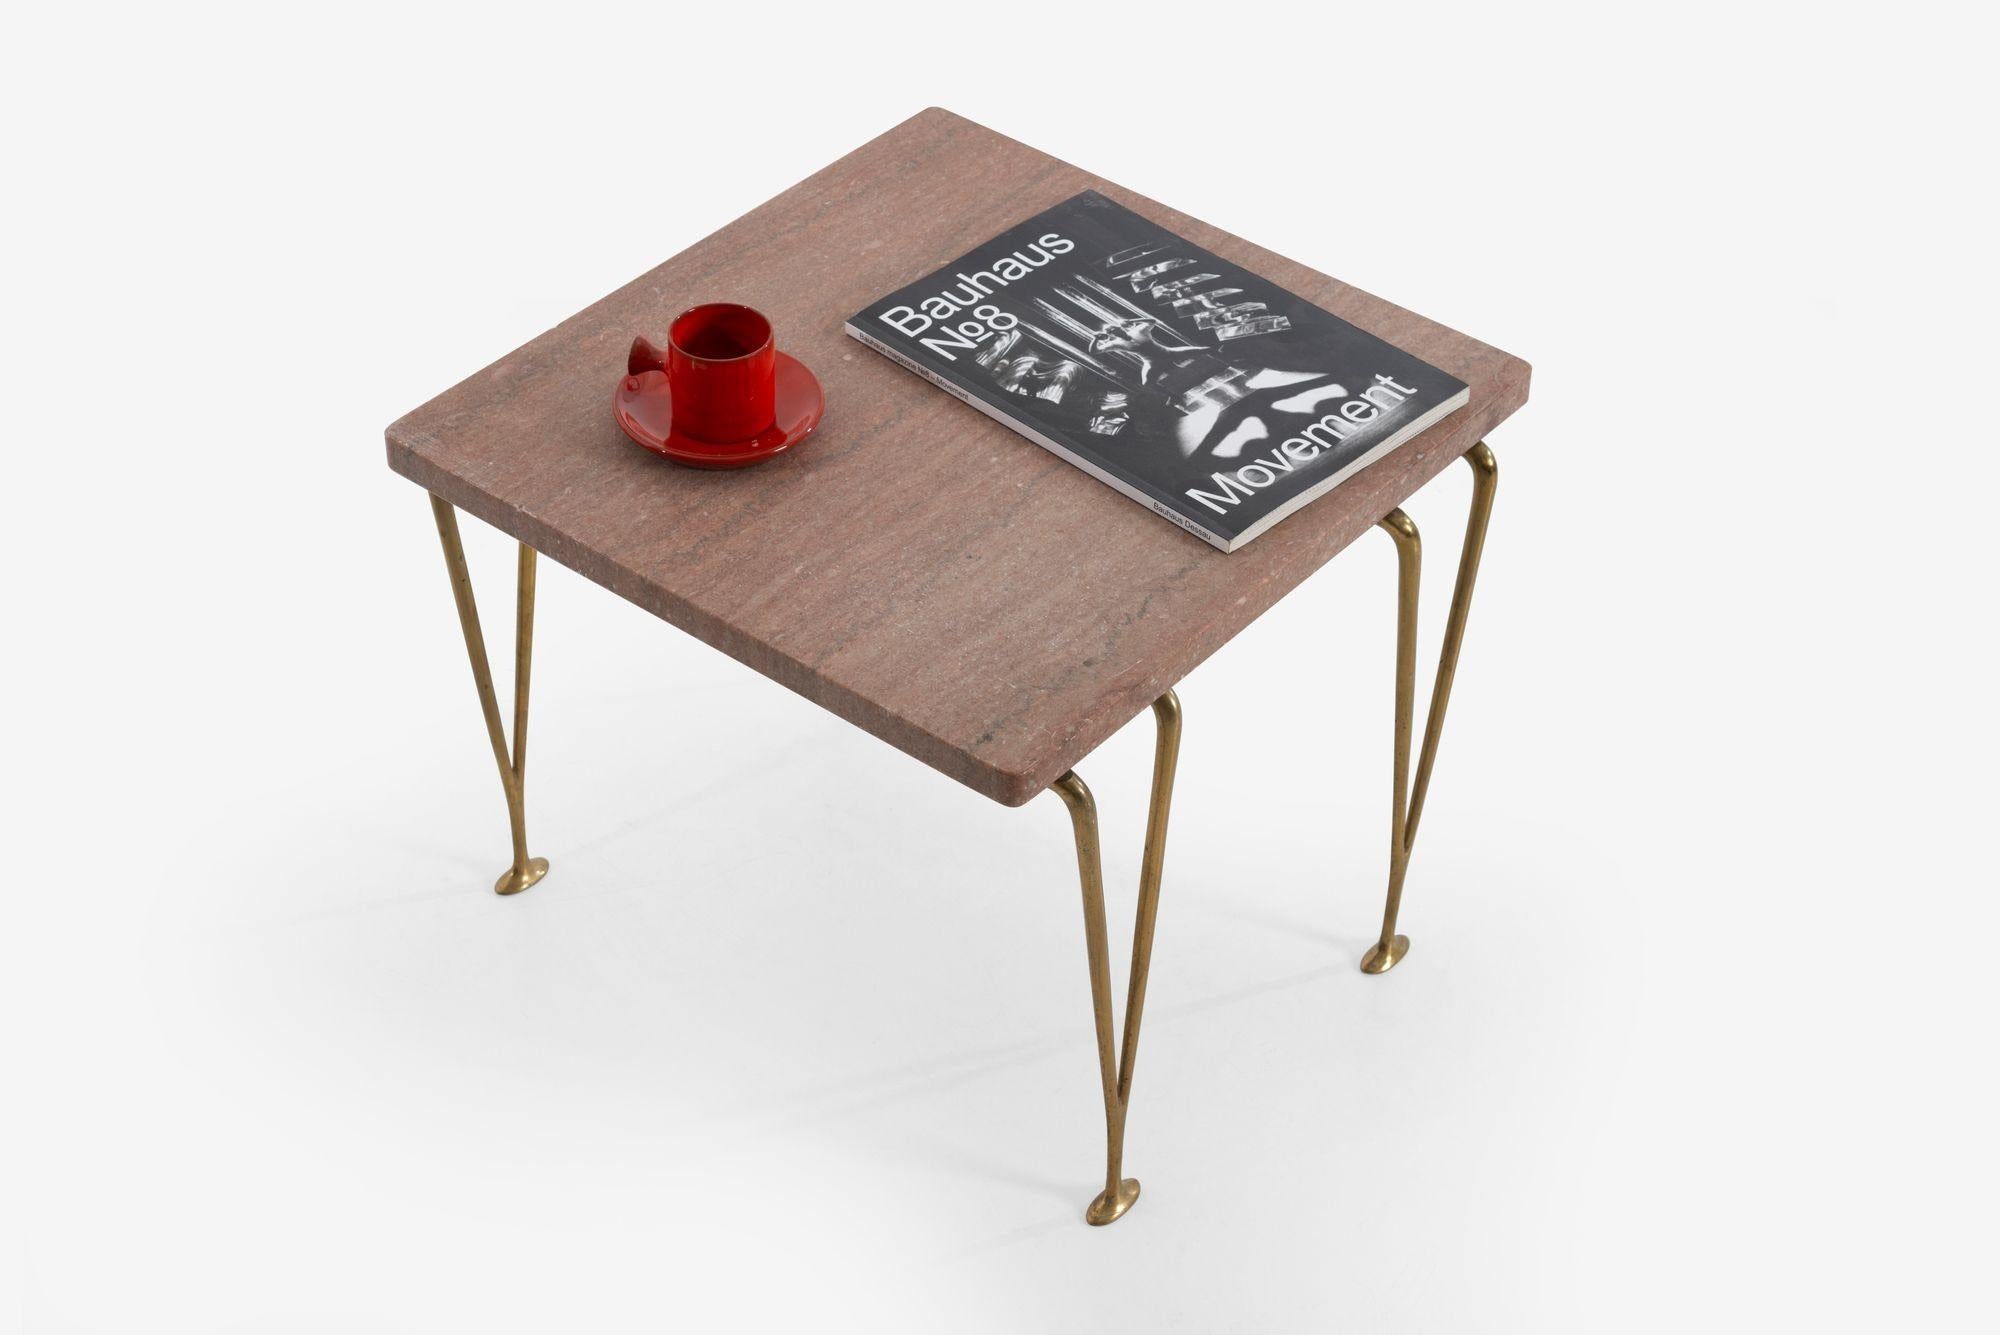 Polished Hugh Acton Unique Side Table For Sale